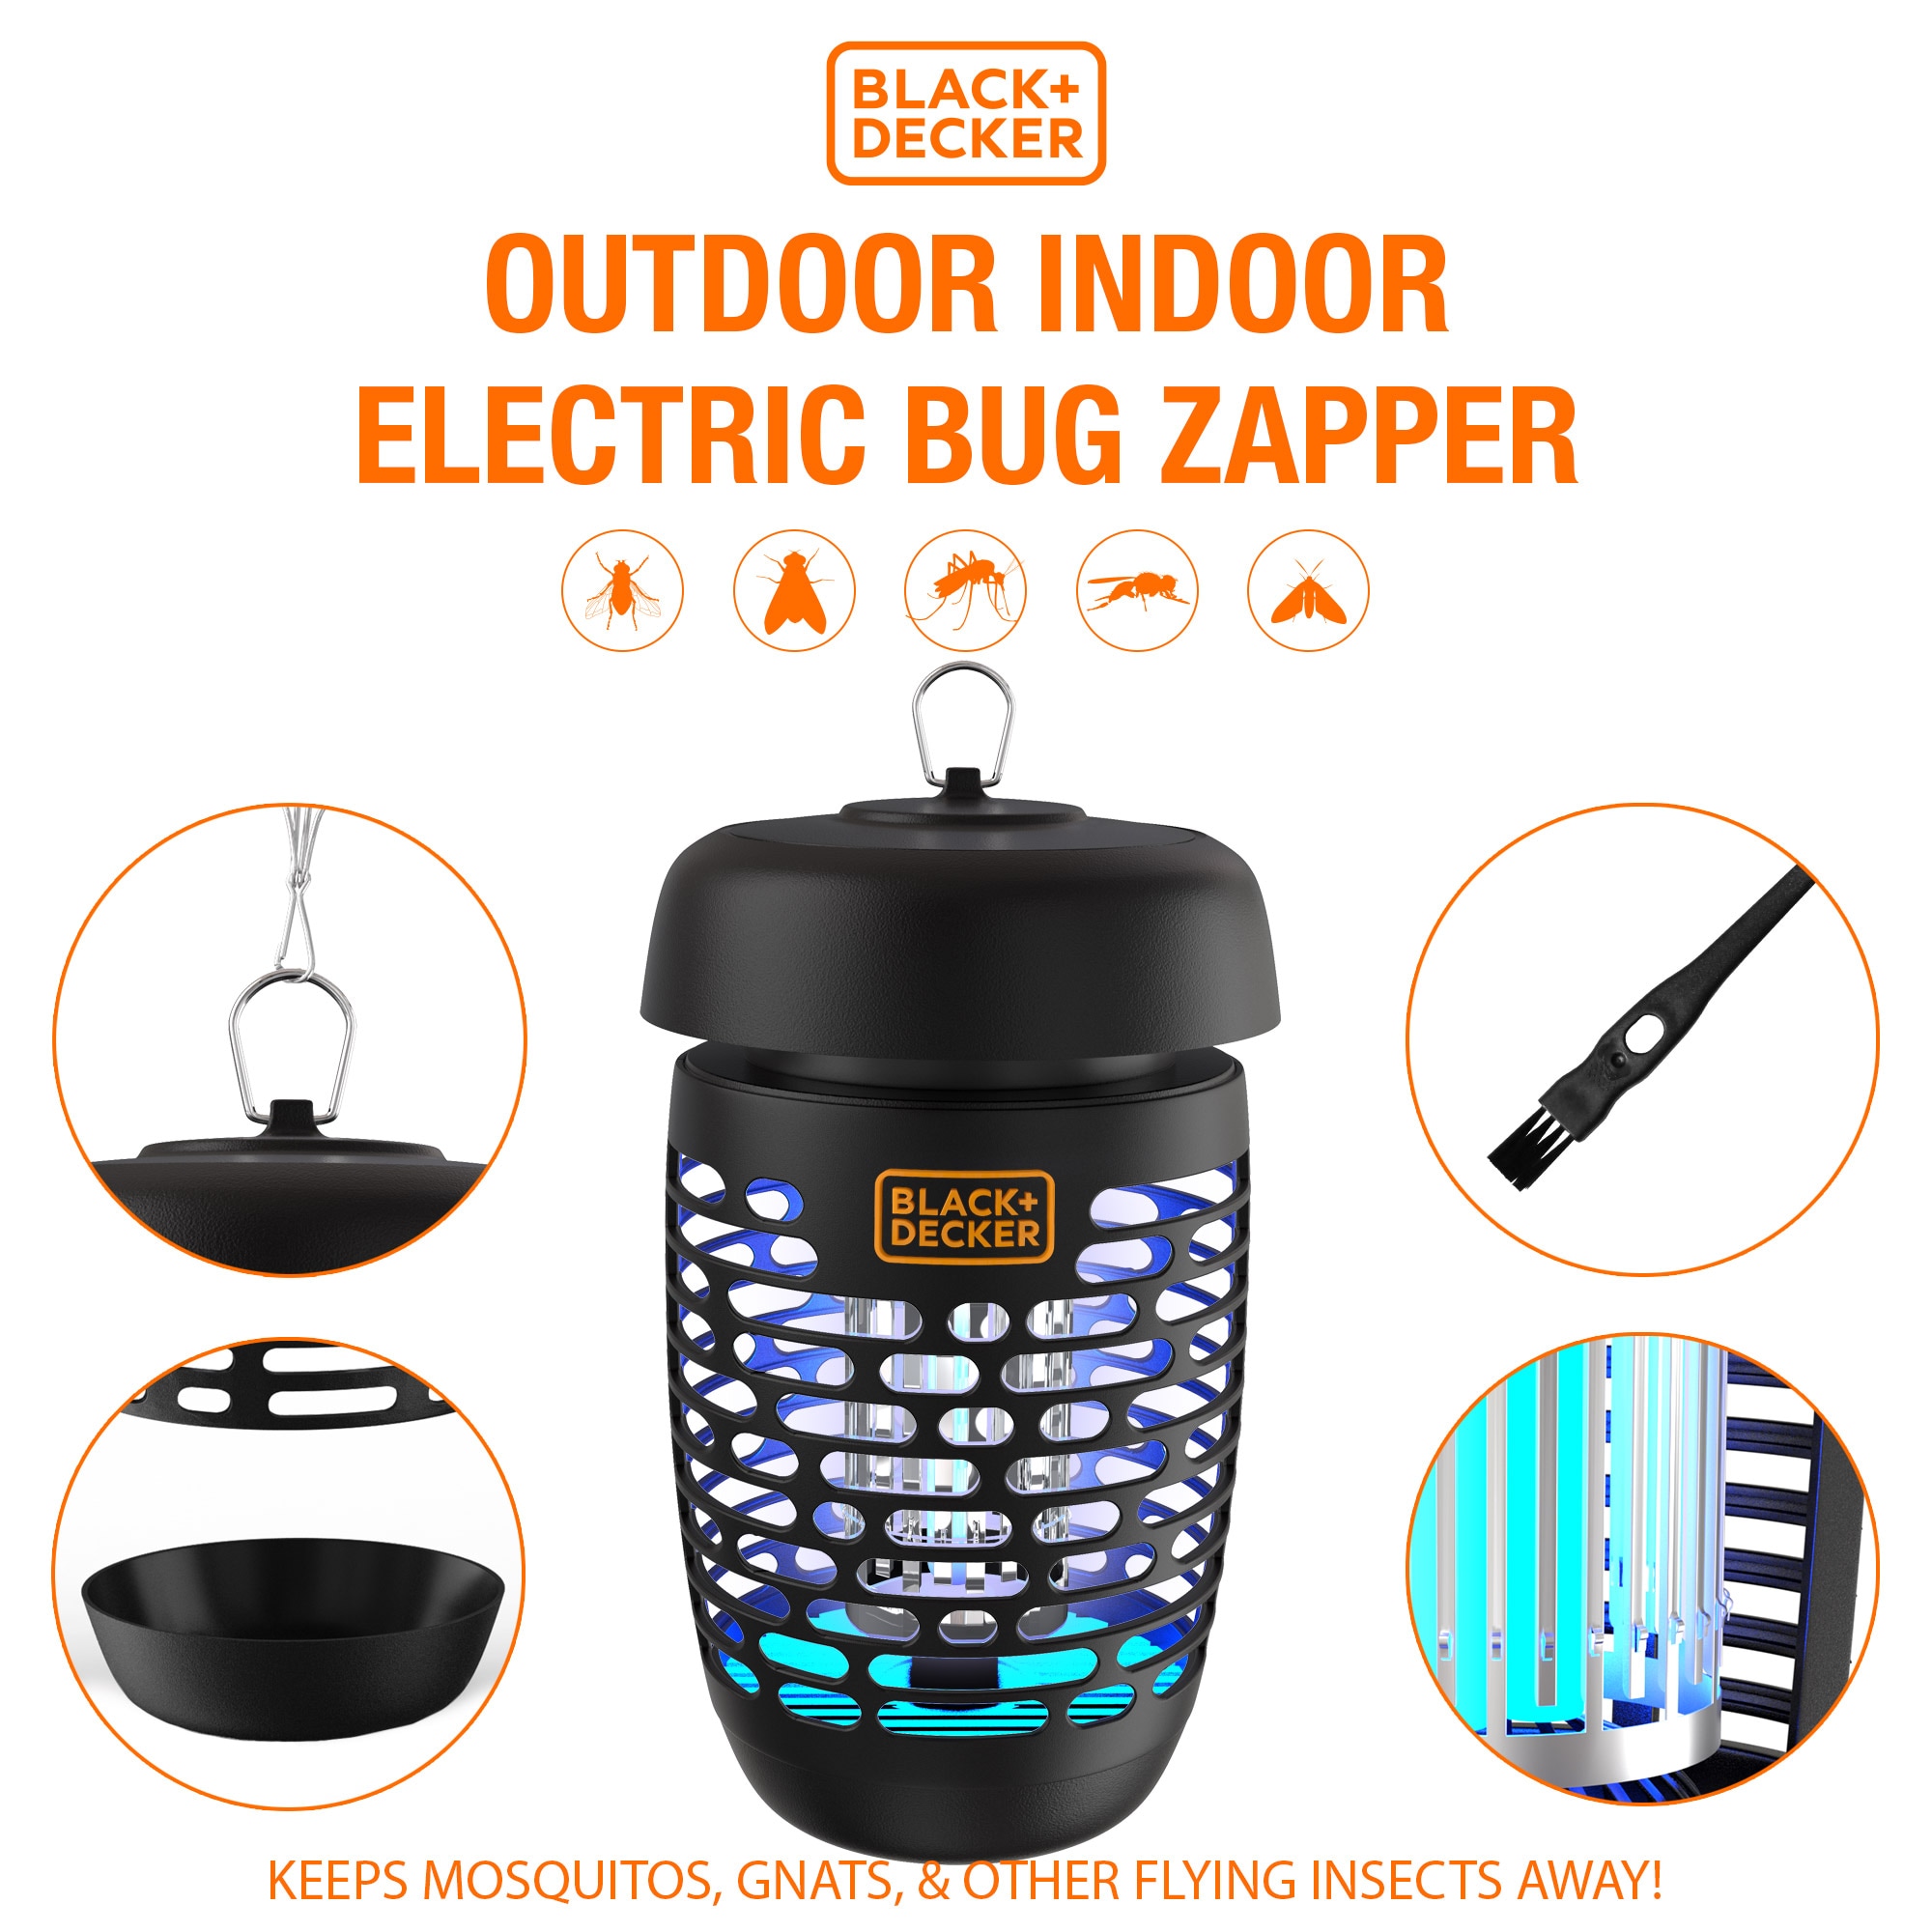 Black + Decker Black High-Voltage Electric Outdoor Bug Zapper